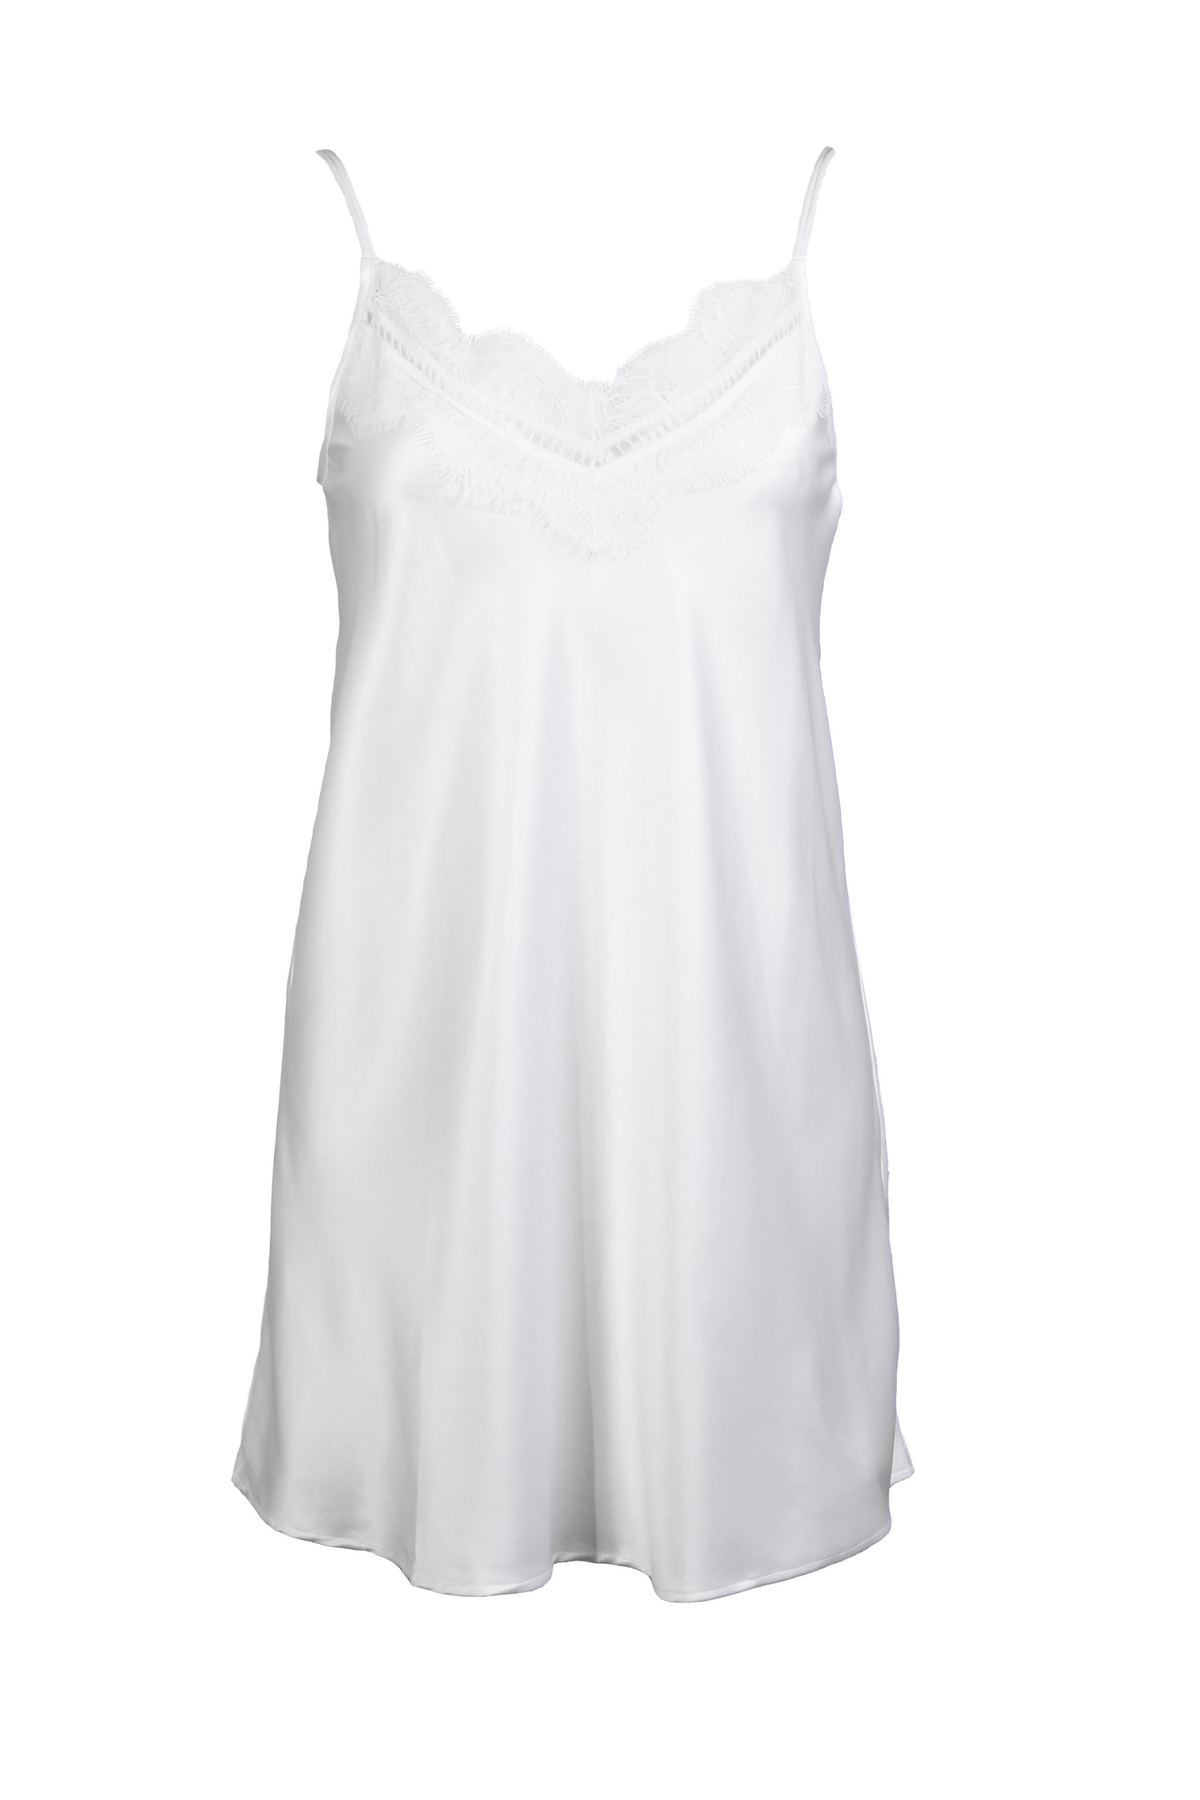 Entos Lingerie Chemise Reve Nightgown - White